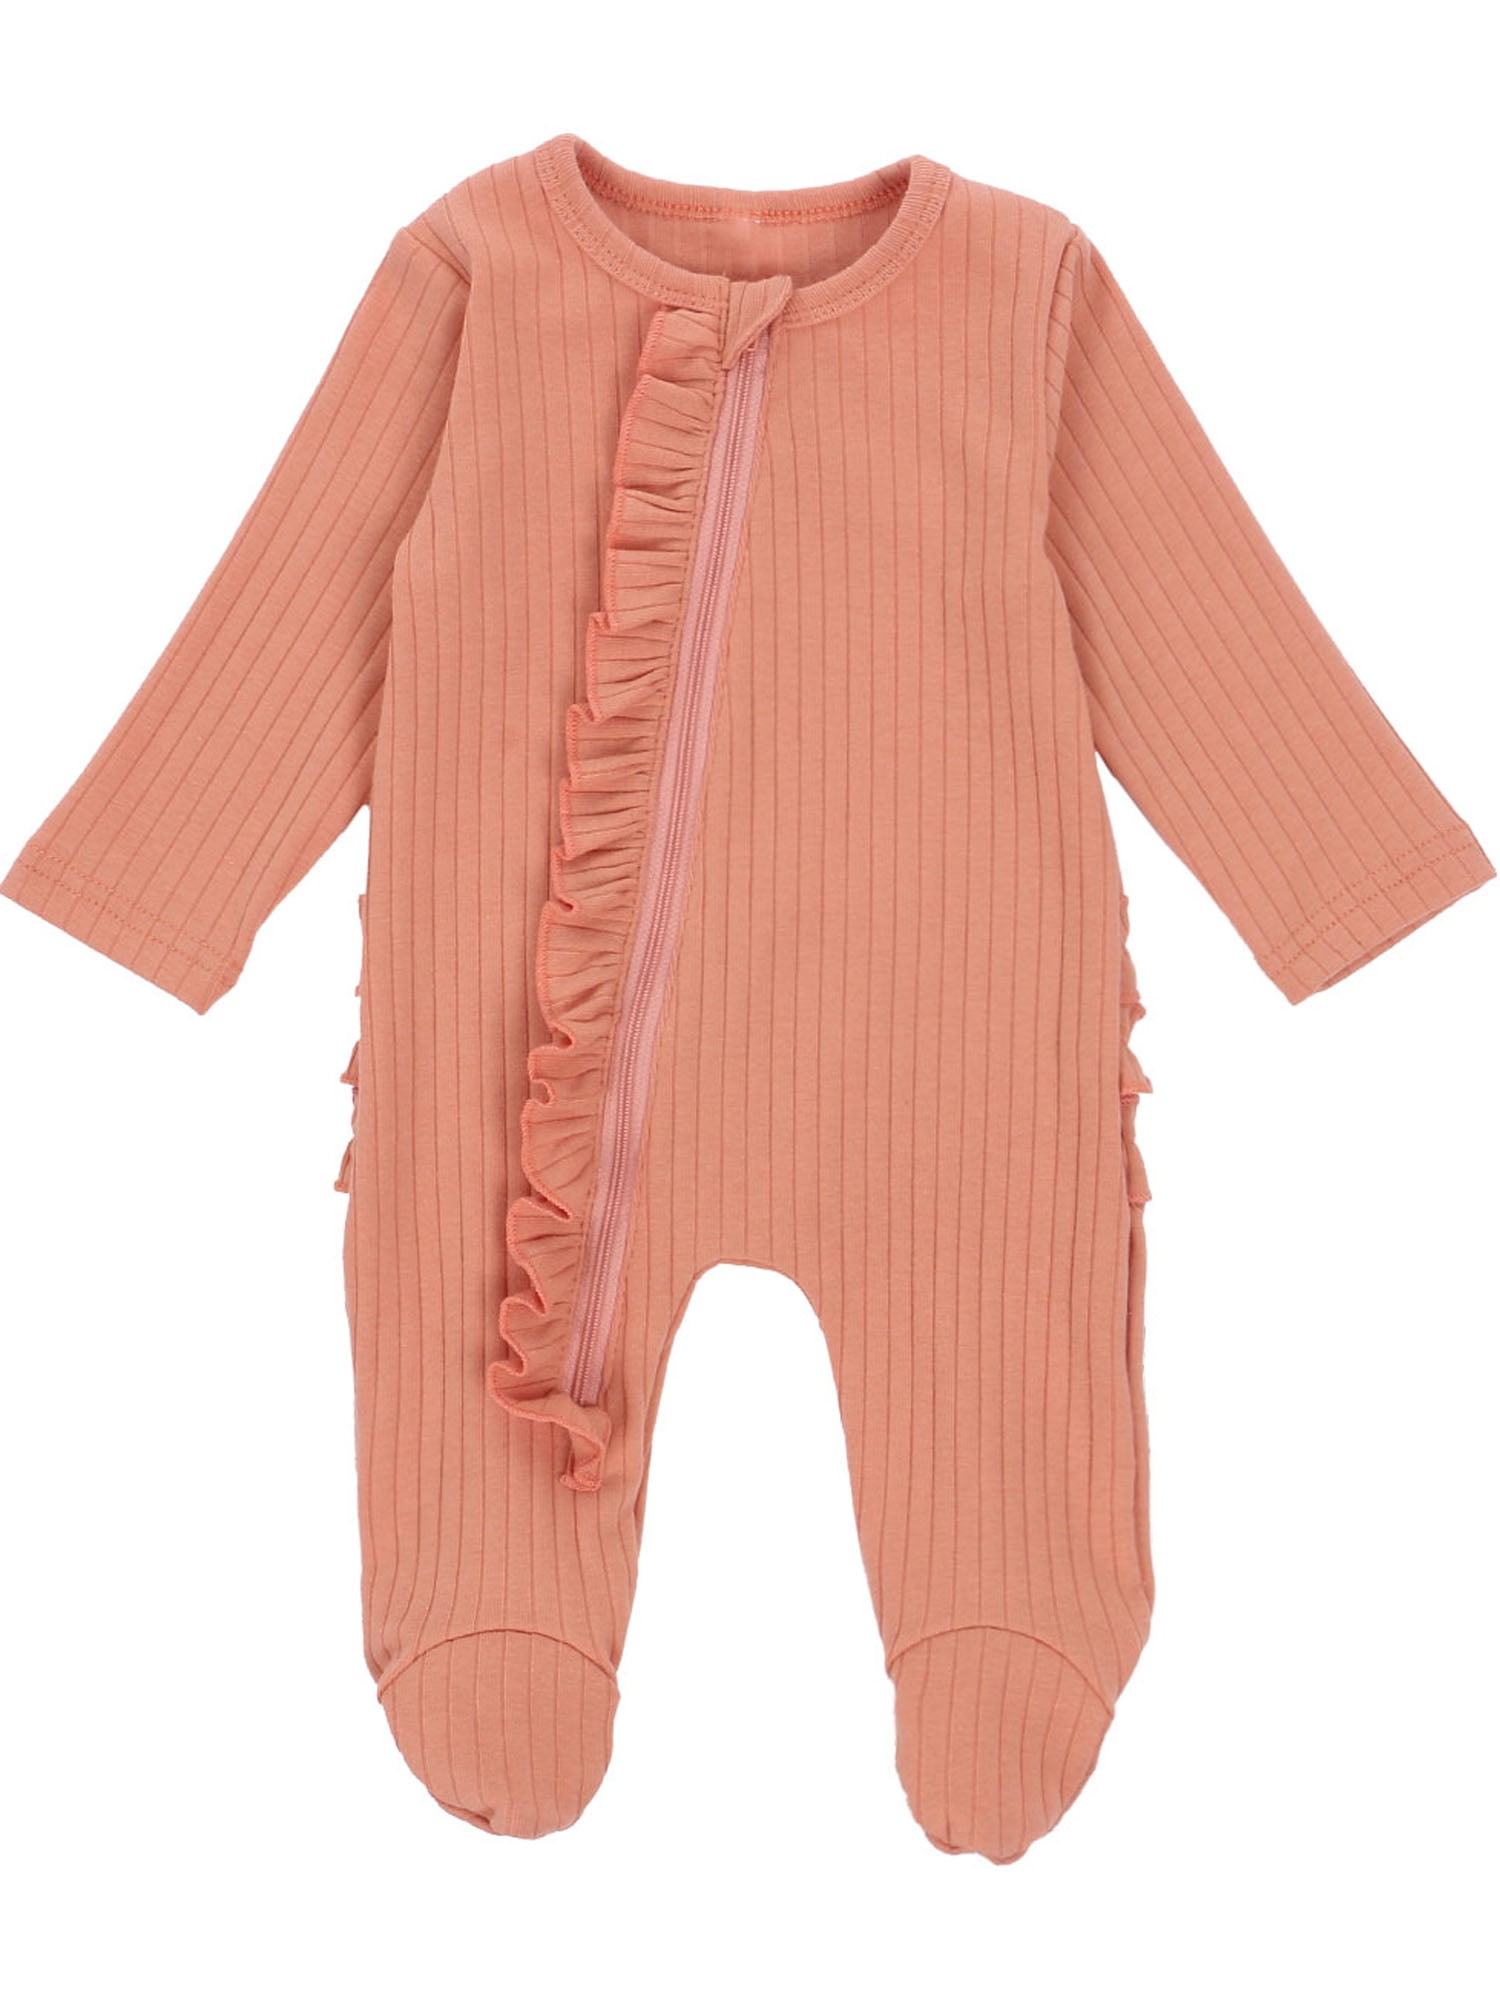 Newborn Baby Boy Girl Romper Paws Jumpsuit Bodysuit Outfits Infant Z7K7 